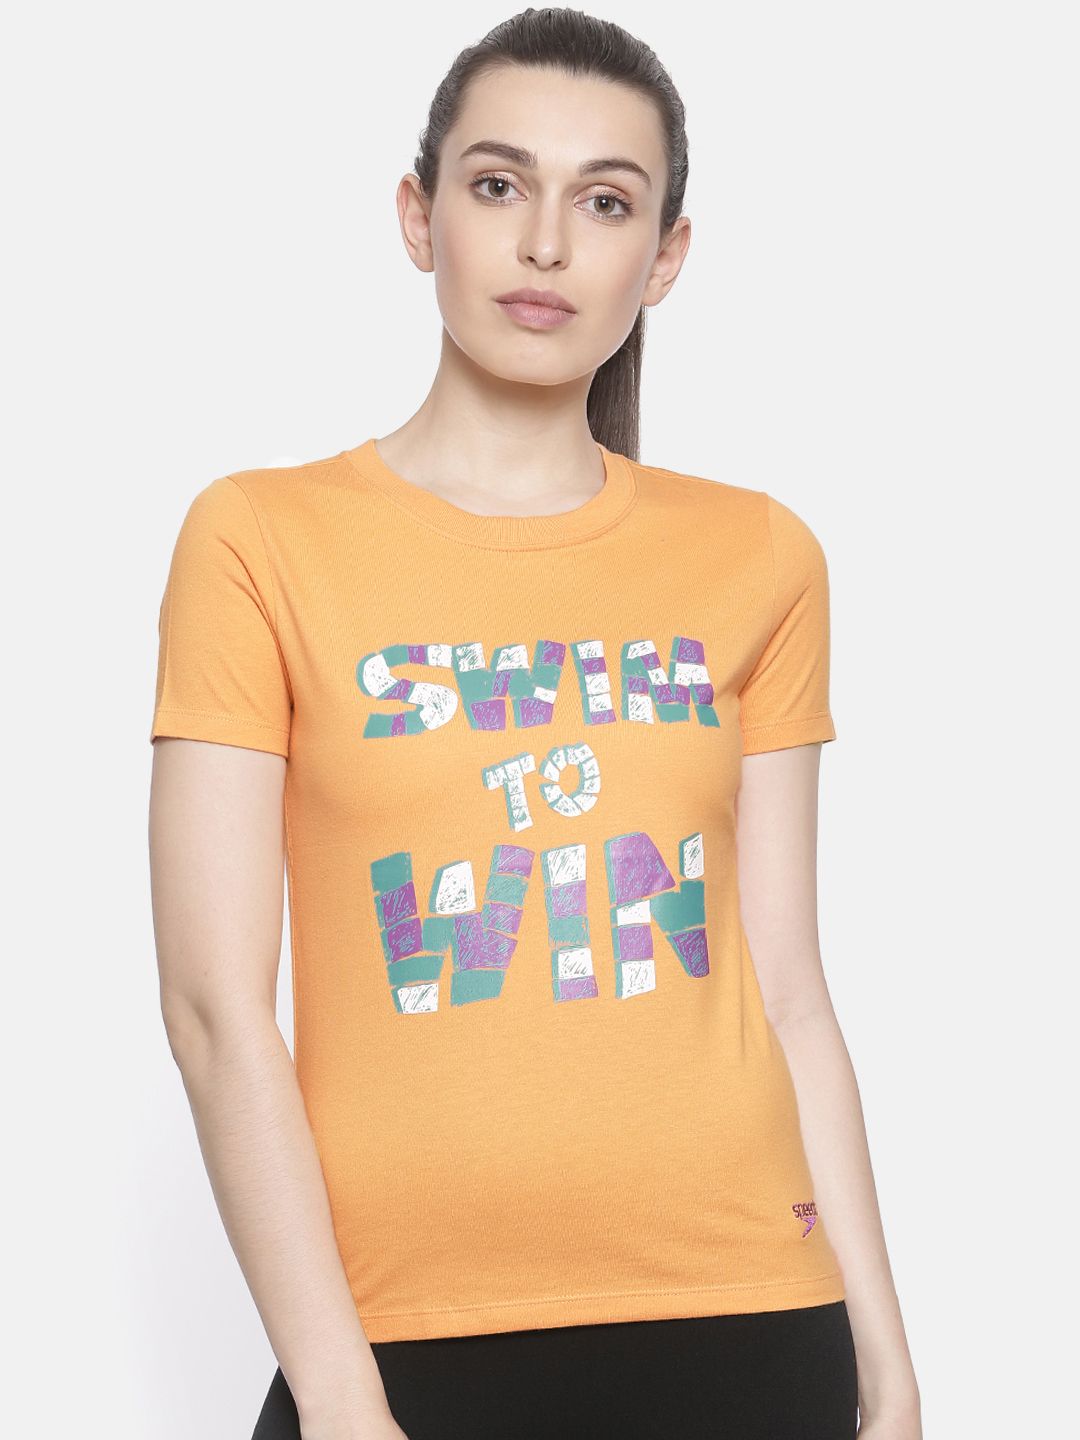 Speedo Women Orange Printed Round Neck T-shirt Price in India